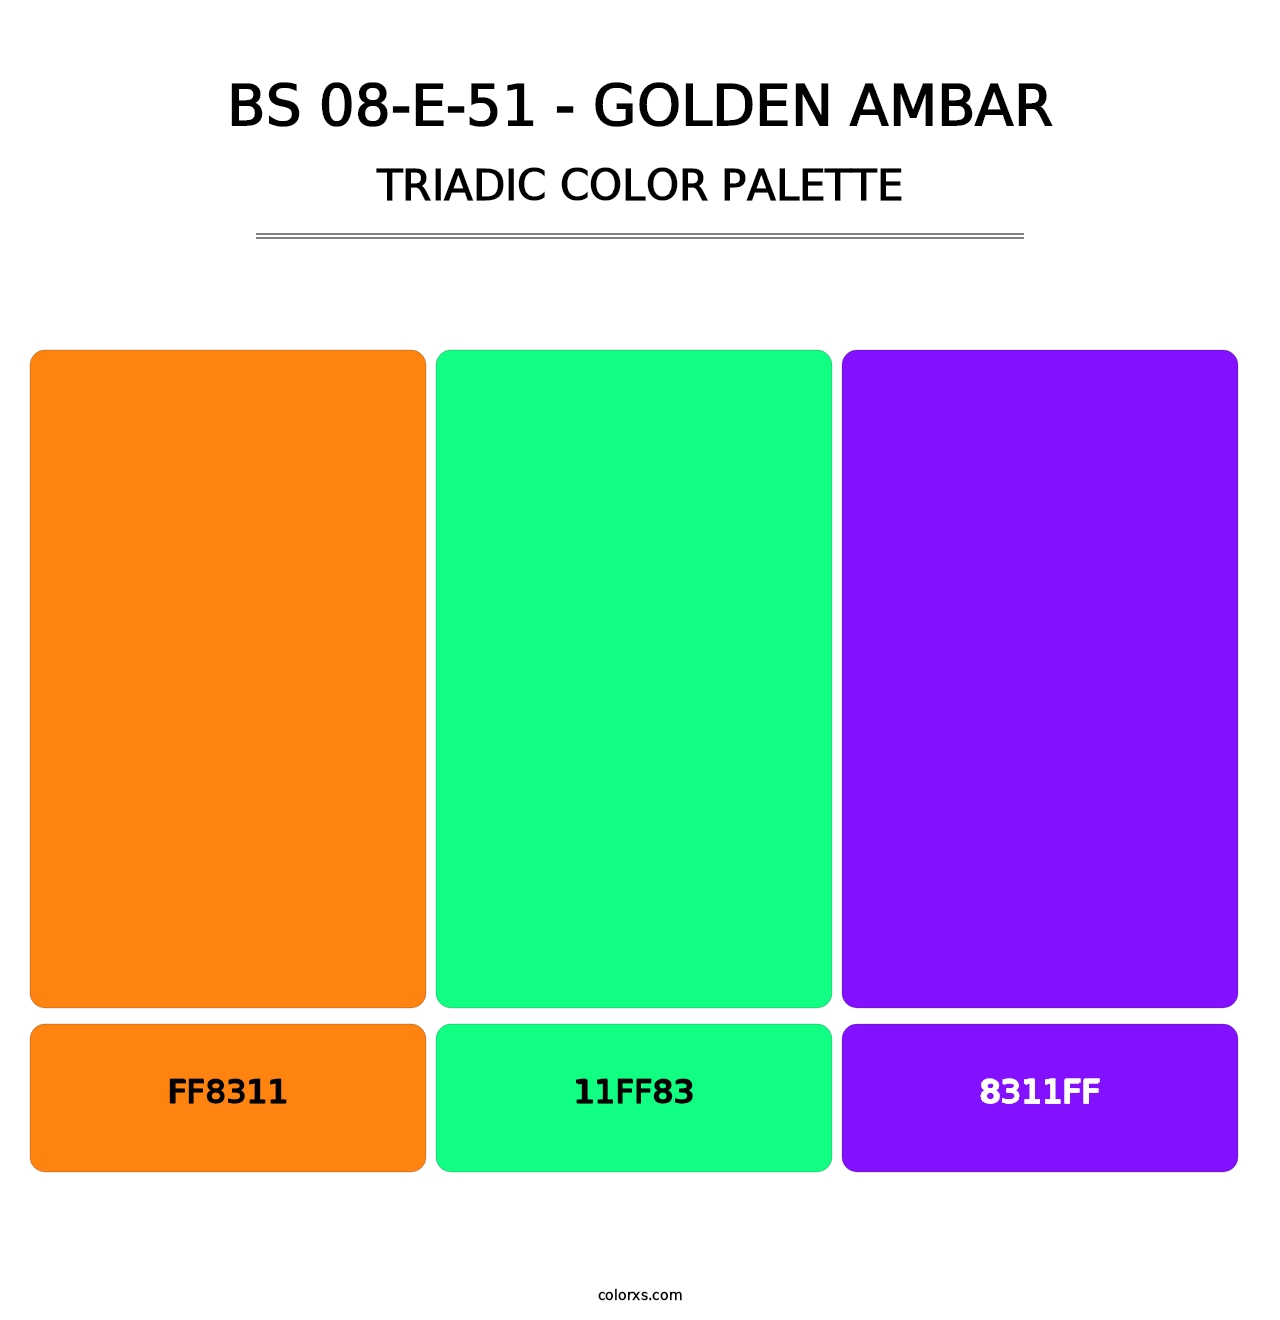 BS 08-E-51 - Golden Ambar - Triadic Color Palette